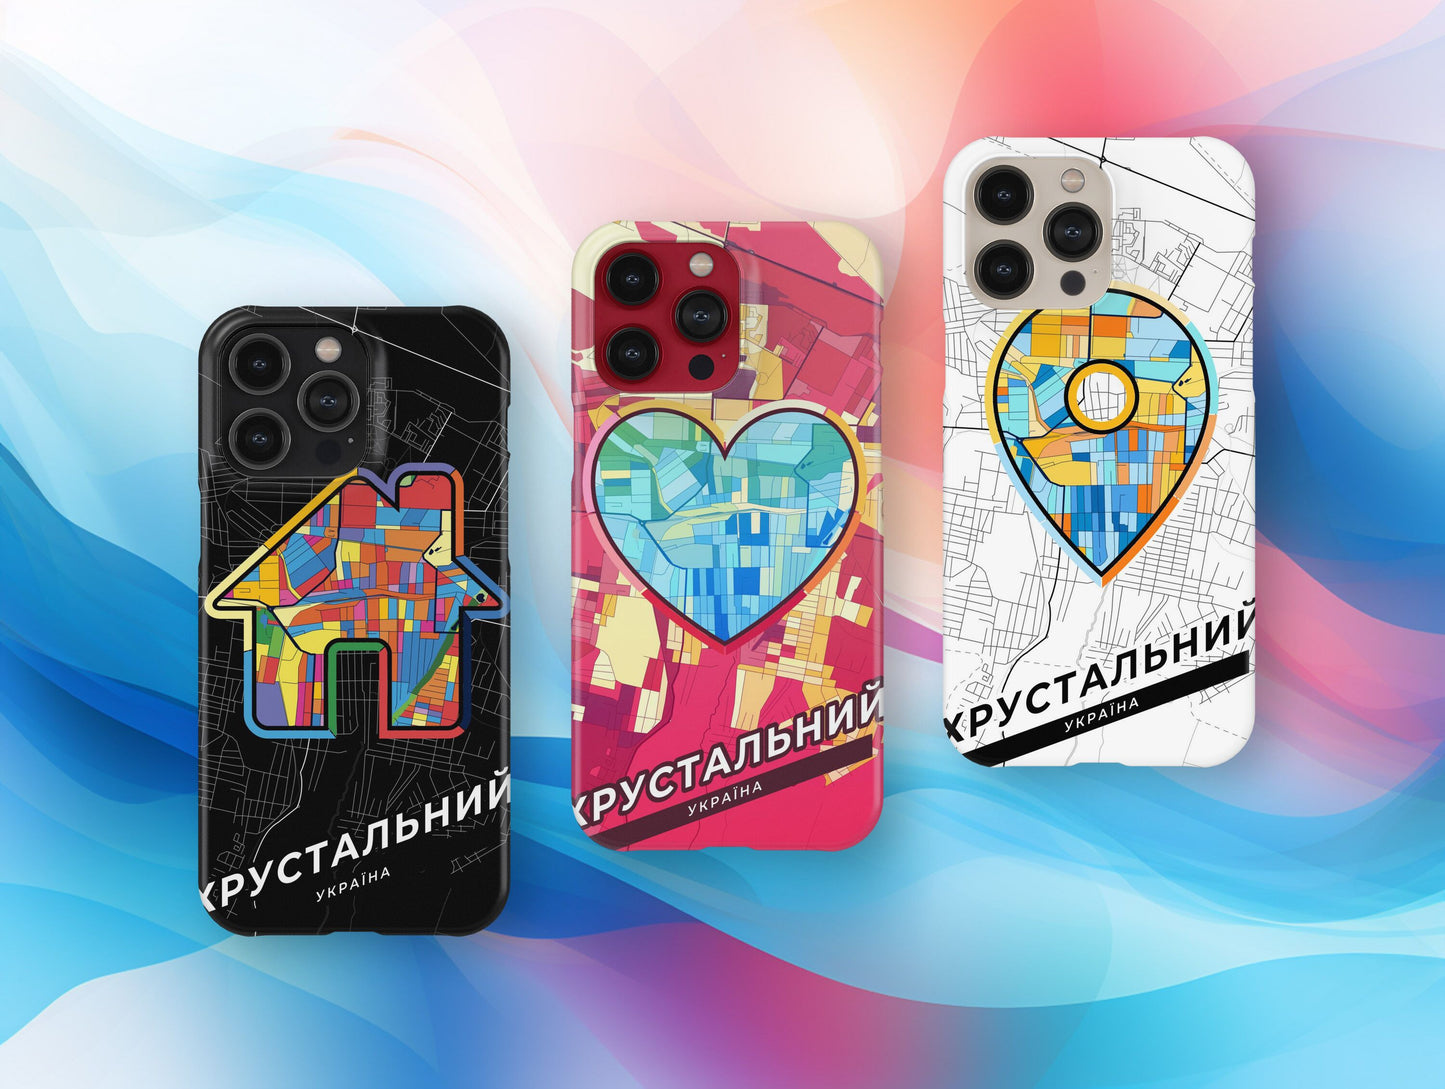 Khrustalnyi Ukraine slim phone case with colorful icon. Birthday, wedding or housewarming gift. Couple match cases.